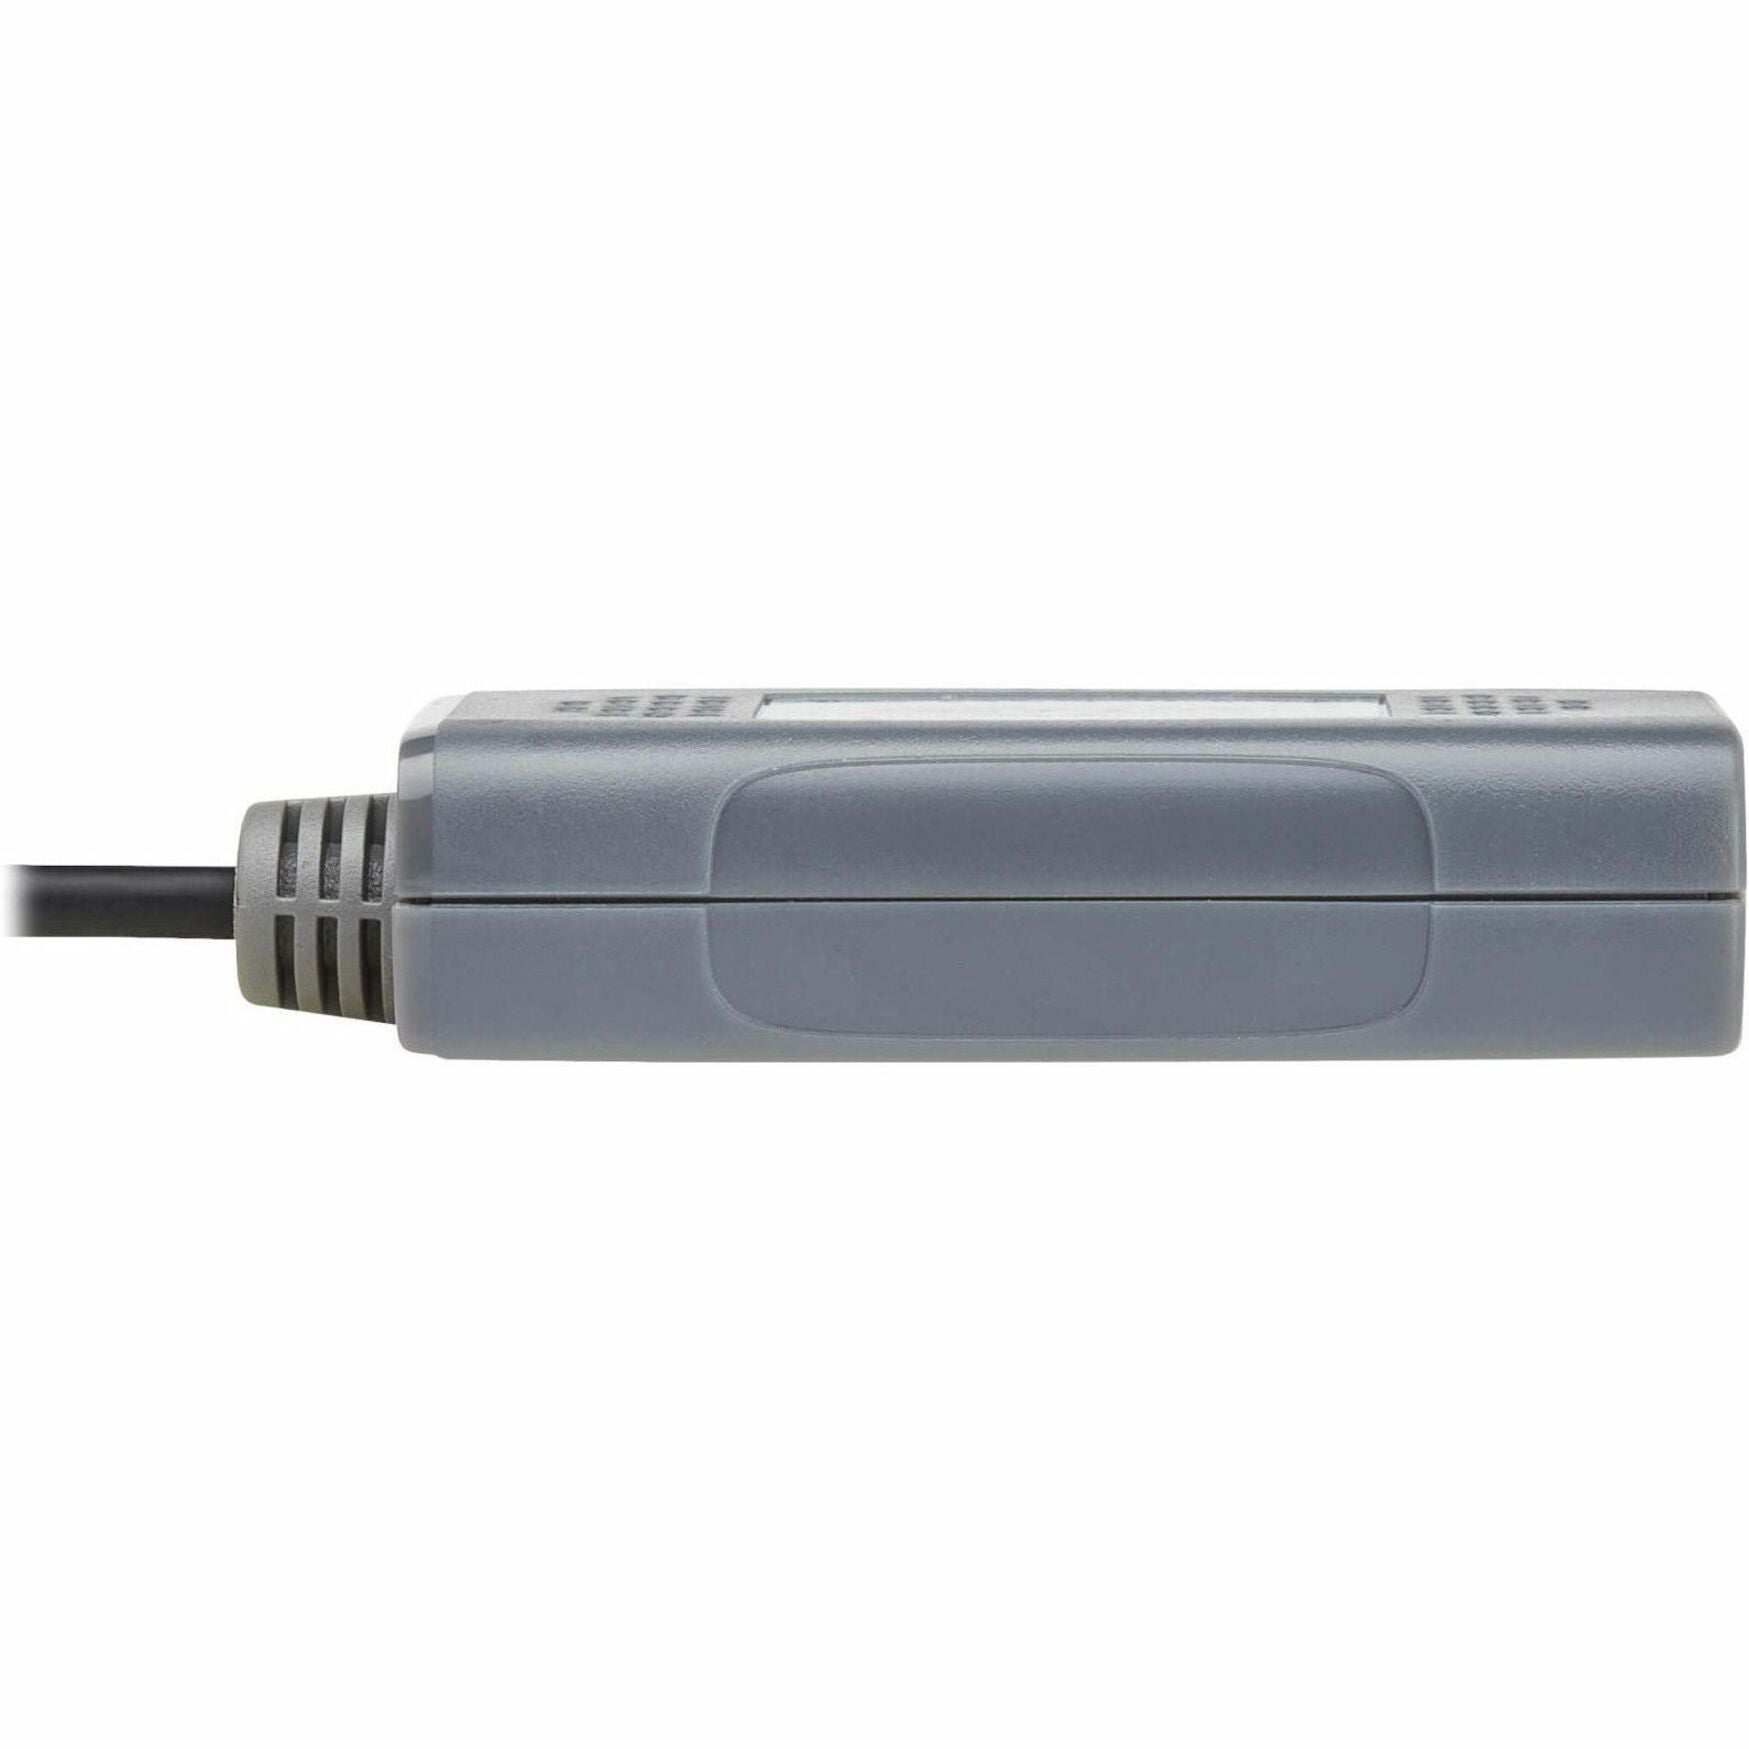 Tripp Lite B127U-002-PDPD2 Video Extender Transmitter/Receiver, 4K, 3840 x 2160, TAA Compliant, USB, Network (RJ-45), 1 Year Warranty